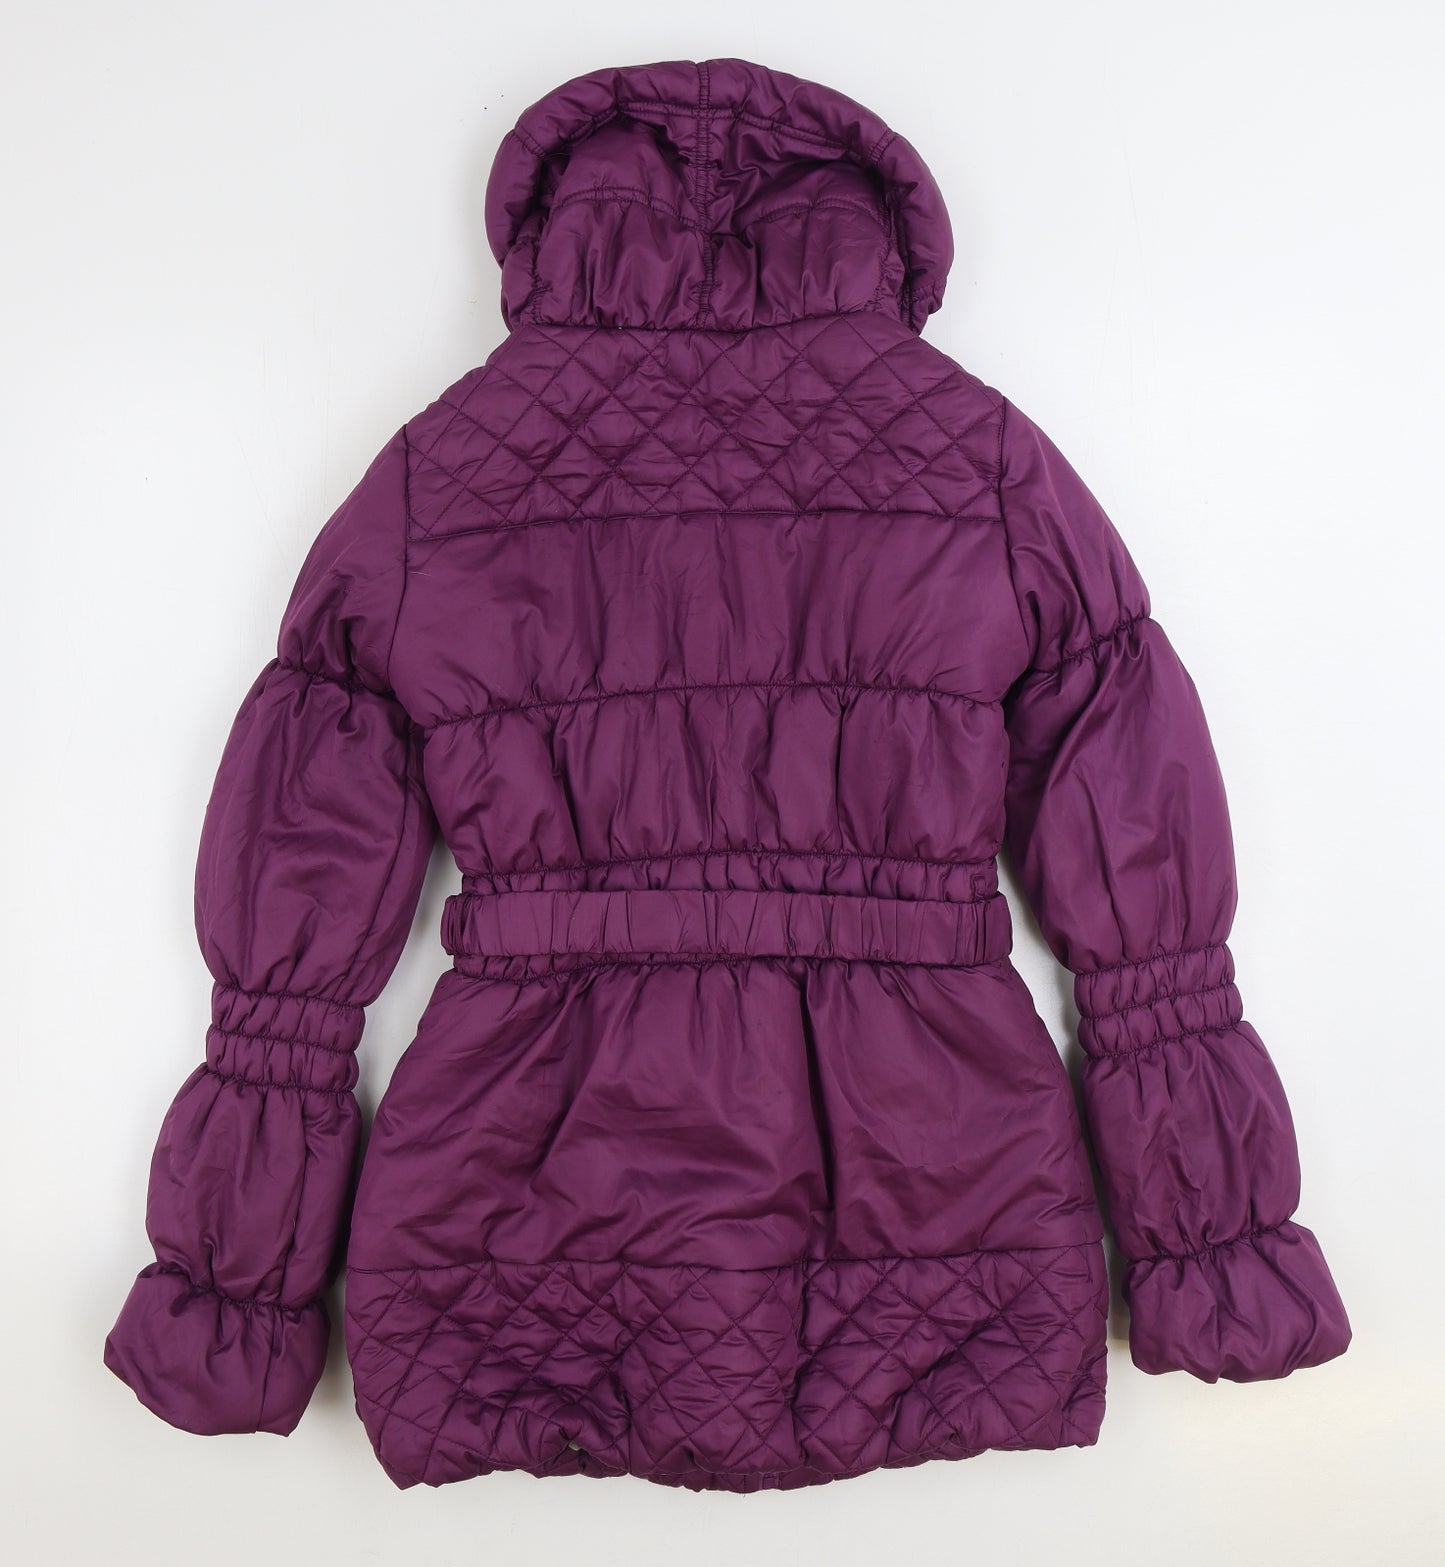 M&Co. Girls Purple Puffer Jacket Jacket Size 13 Years Zip